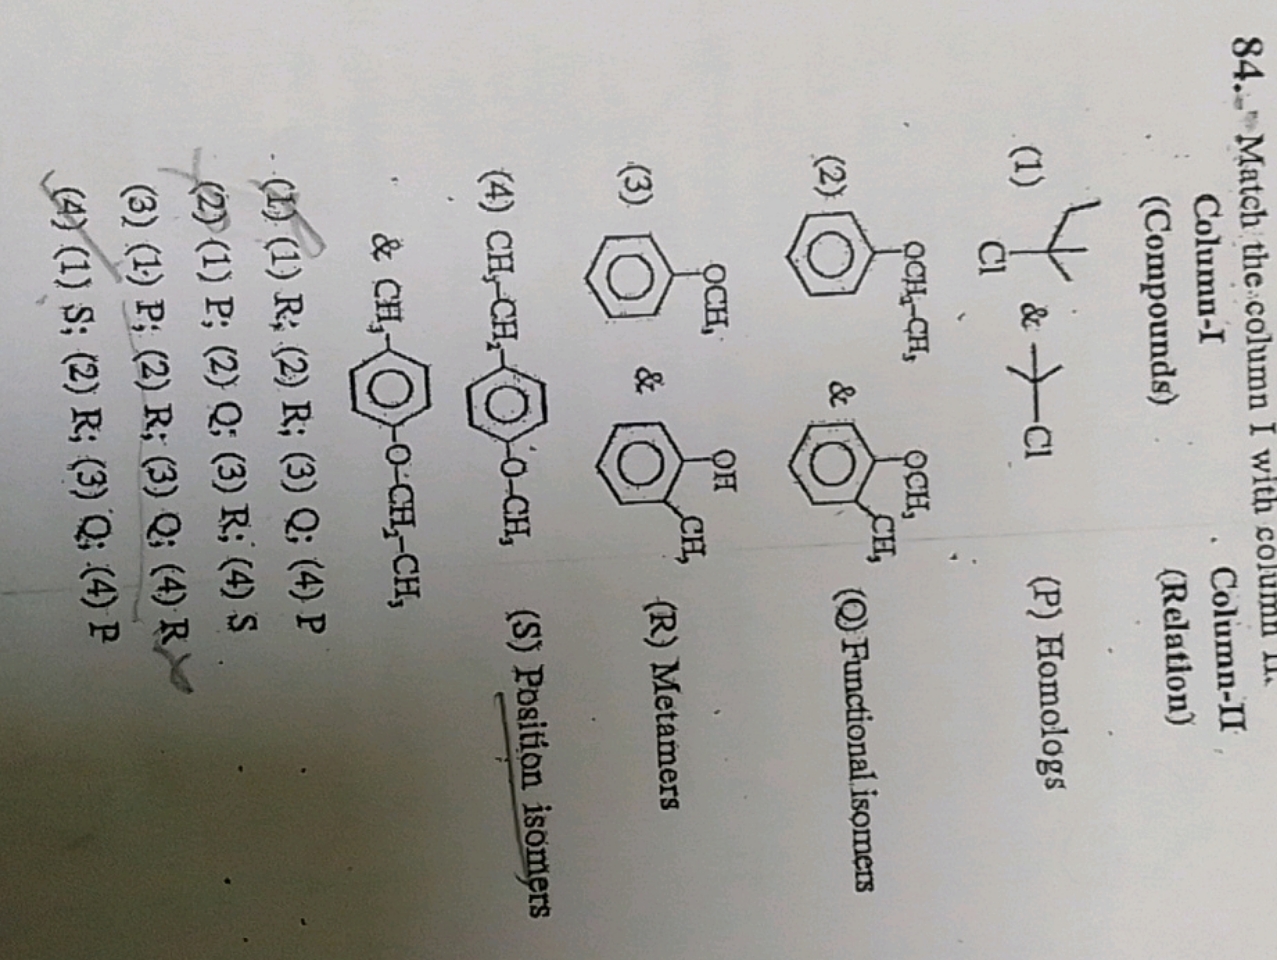 CCOc1ccccc1 \& COc1ccccc1C (Q) Functional isomers